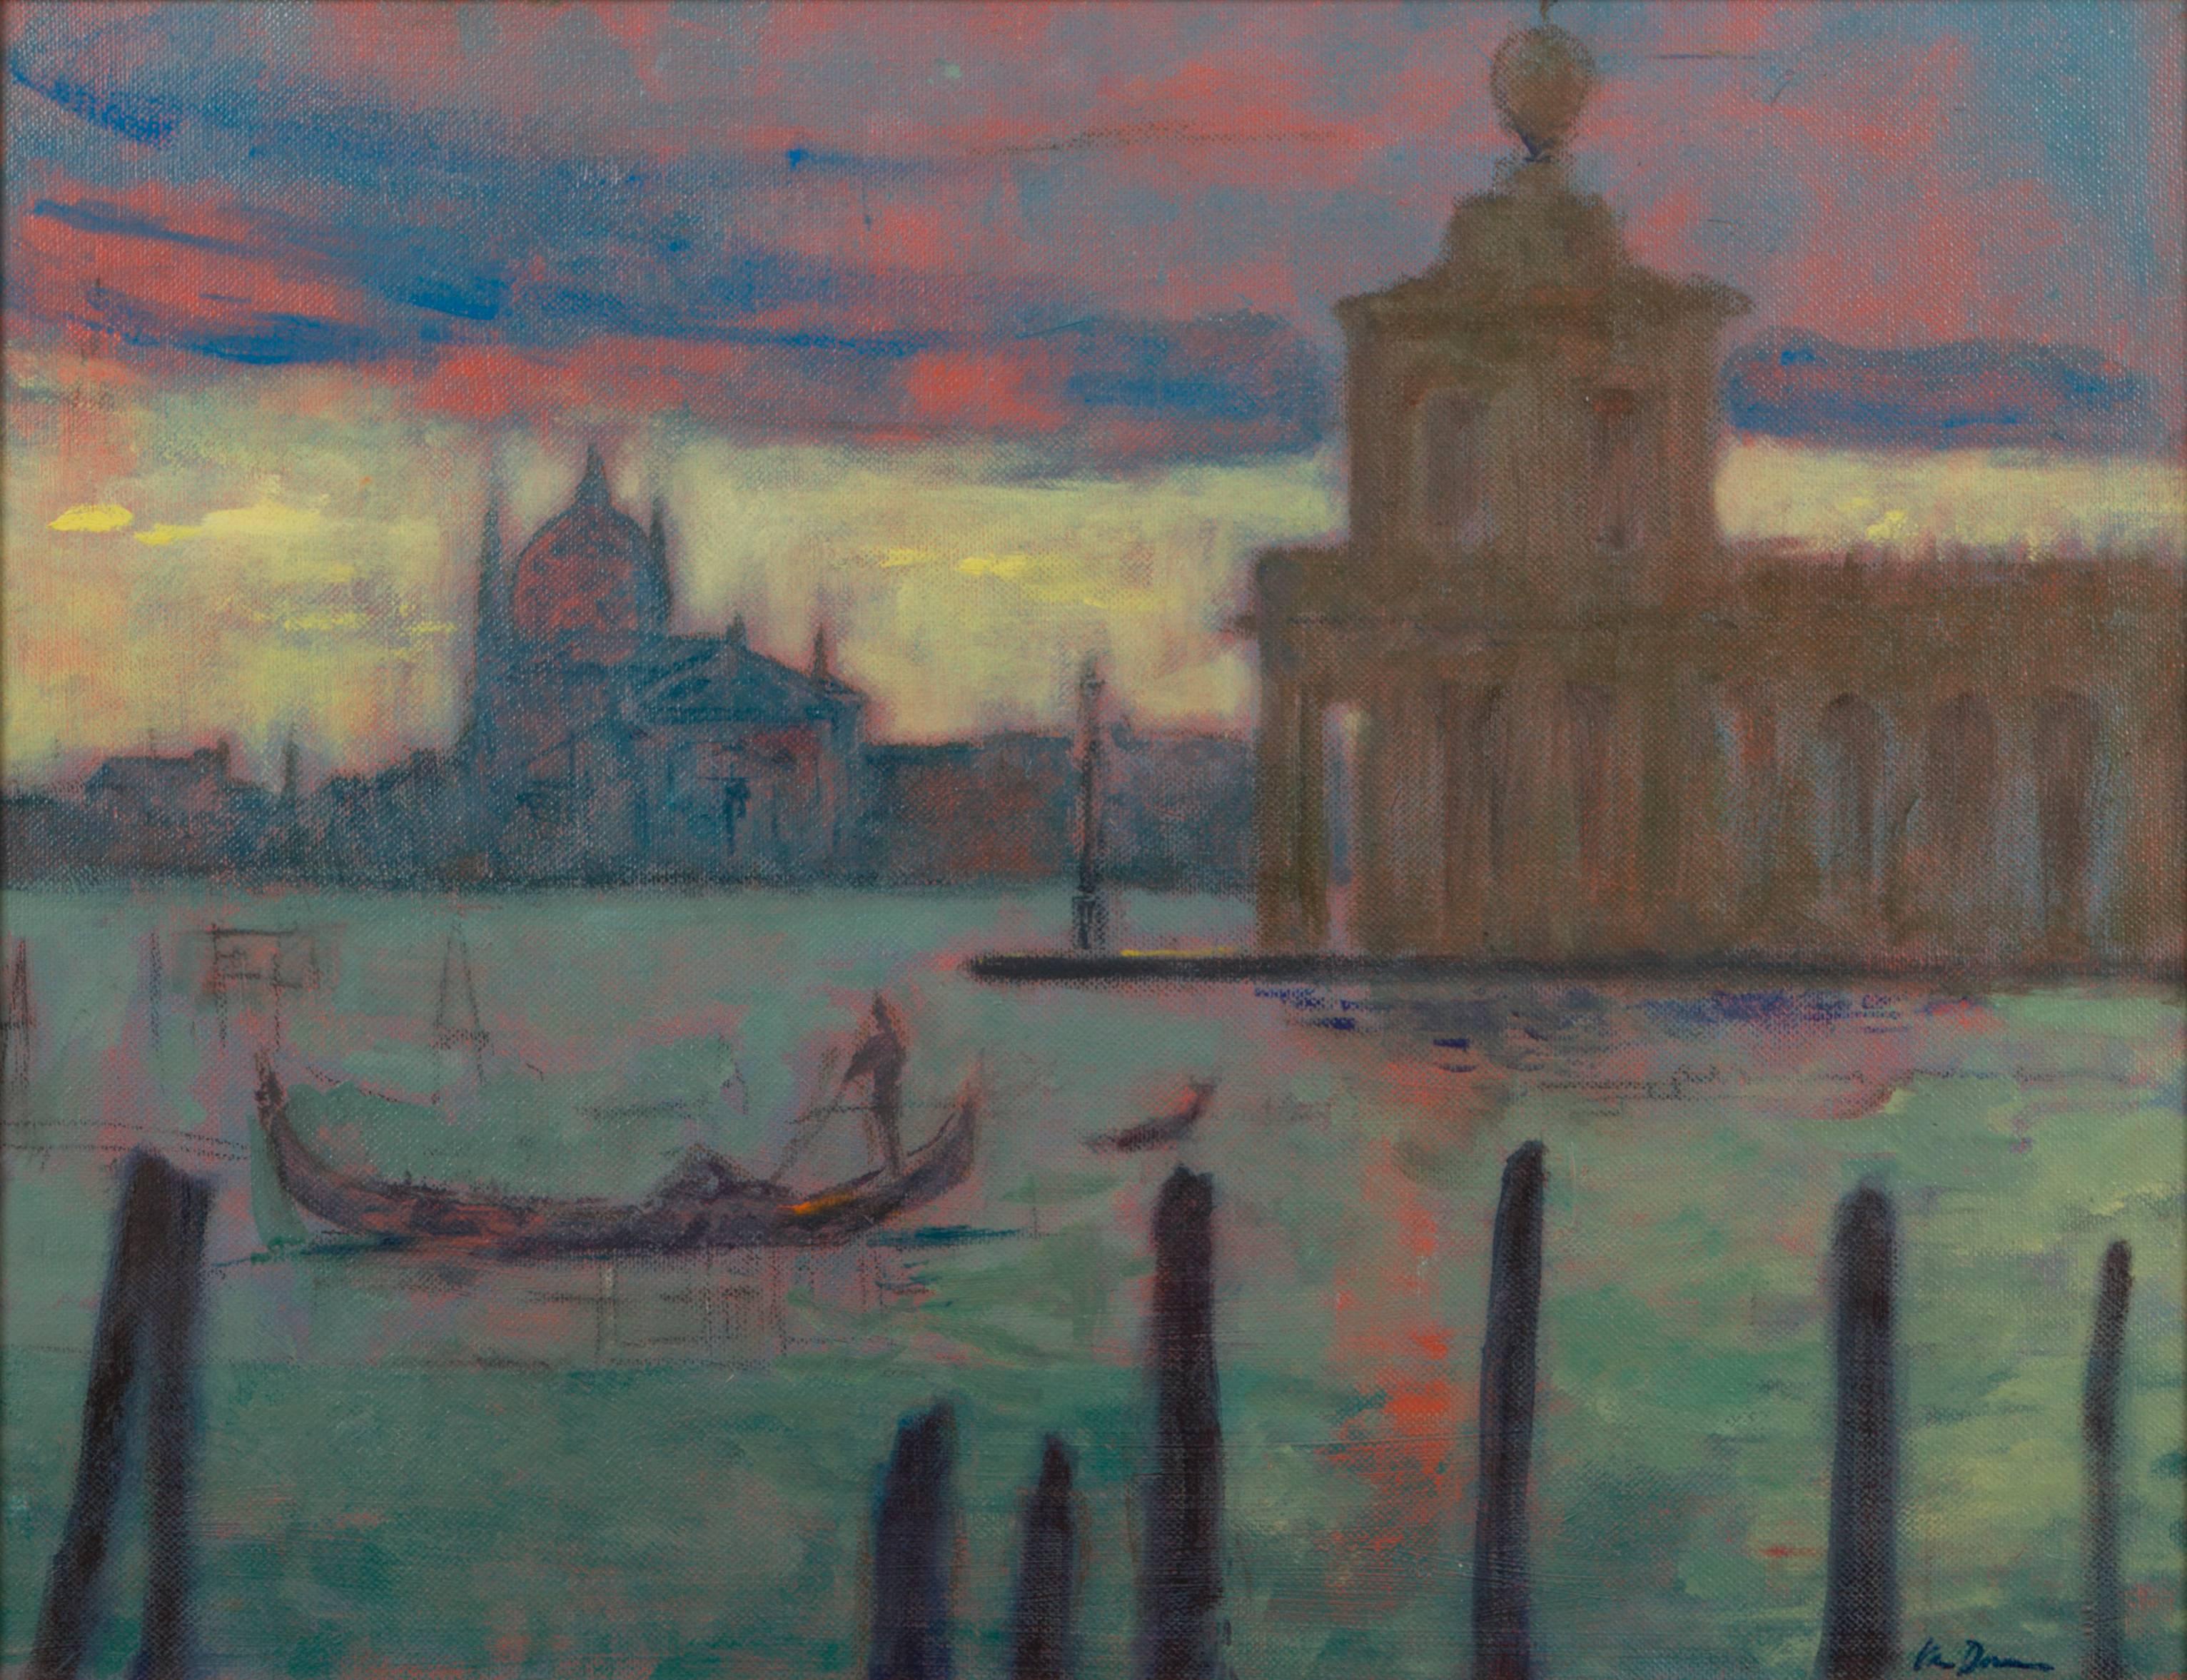 Dogana di Mare with Gondola, Venice, Italy - Painting by Adam Van Doren